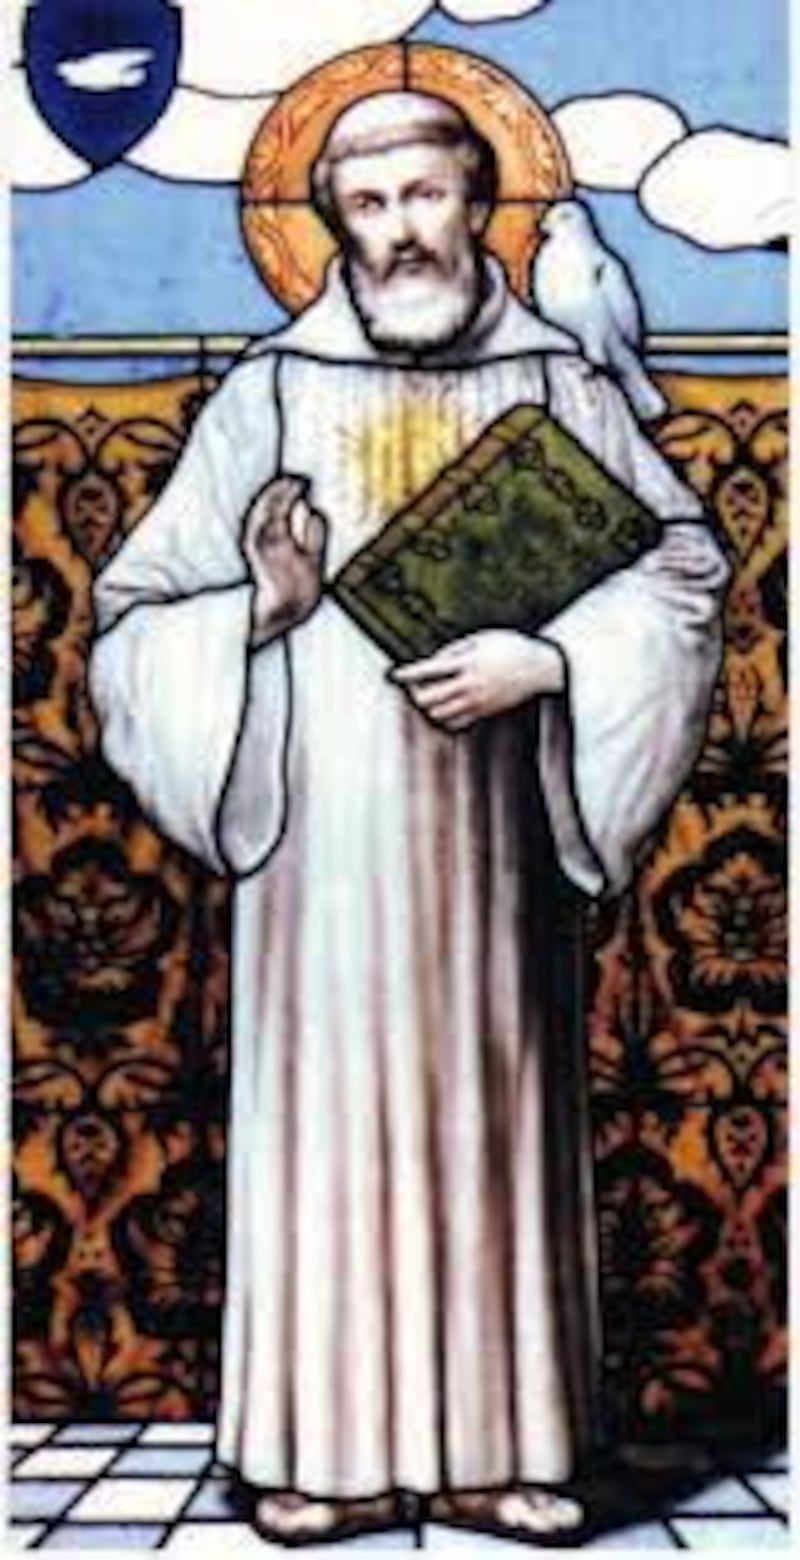 Columbanus, sometimes referred to as the patron saint of Europe 